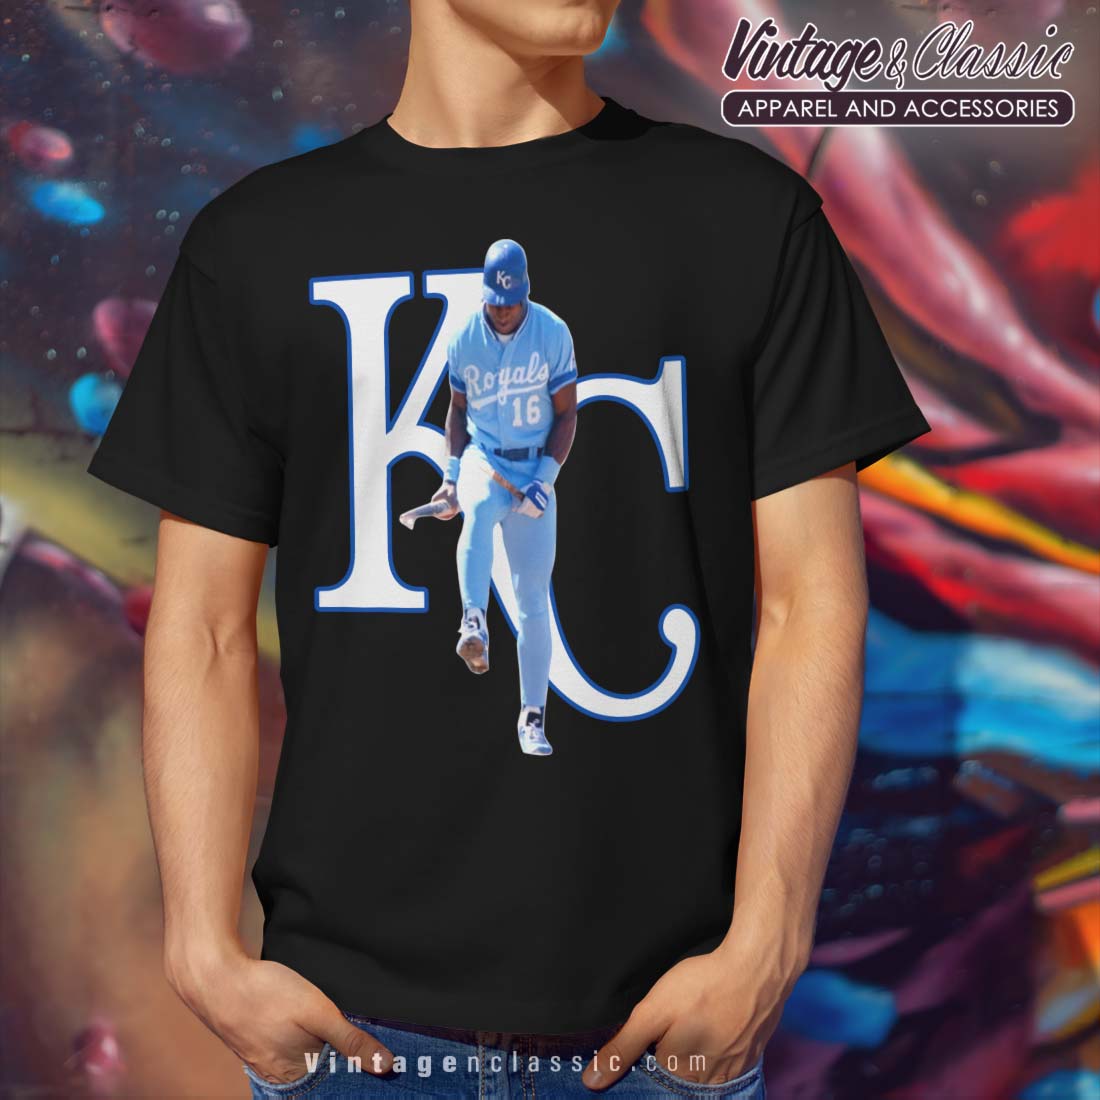 Custom Made Bo Jackson Number 16 Kansas City Royals Baseball Jersey Unisex